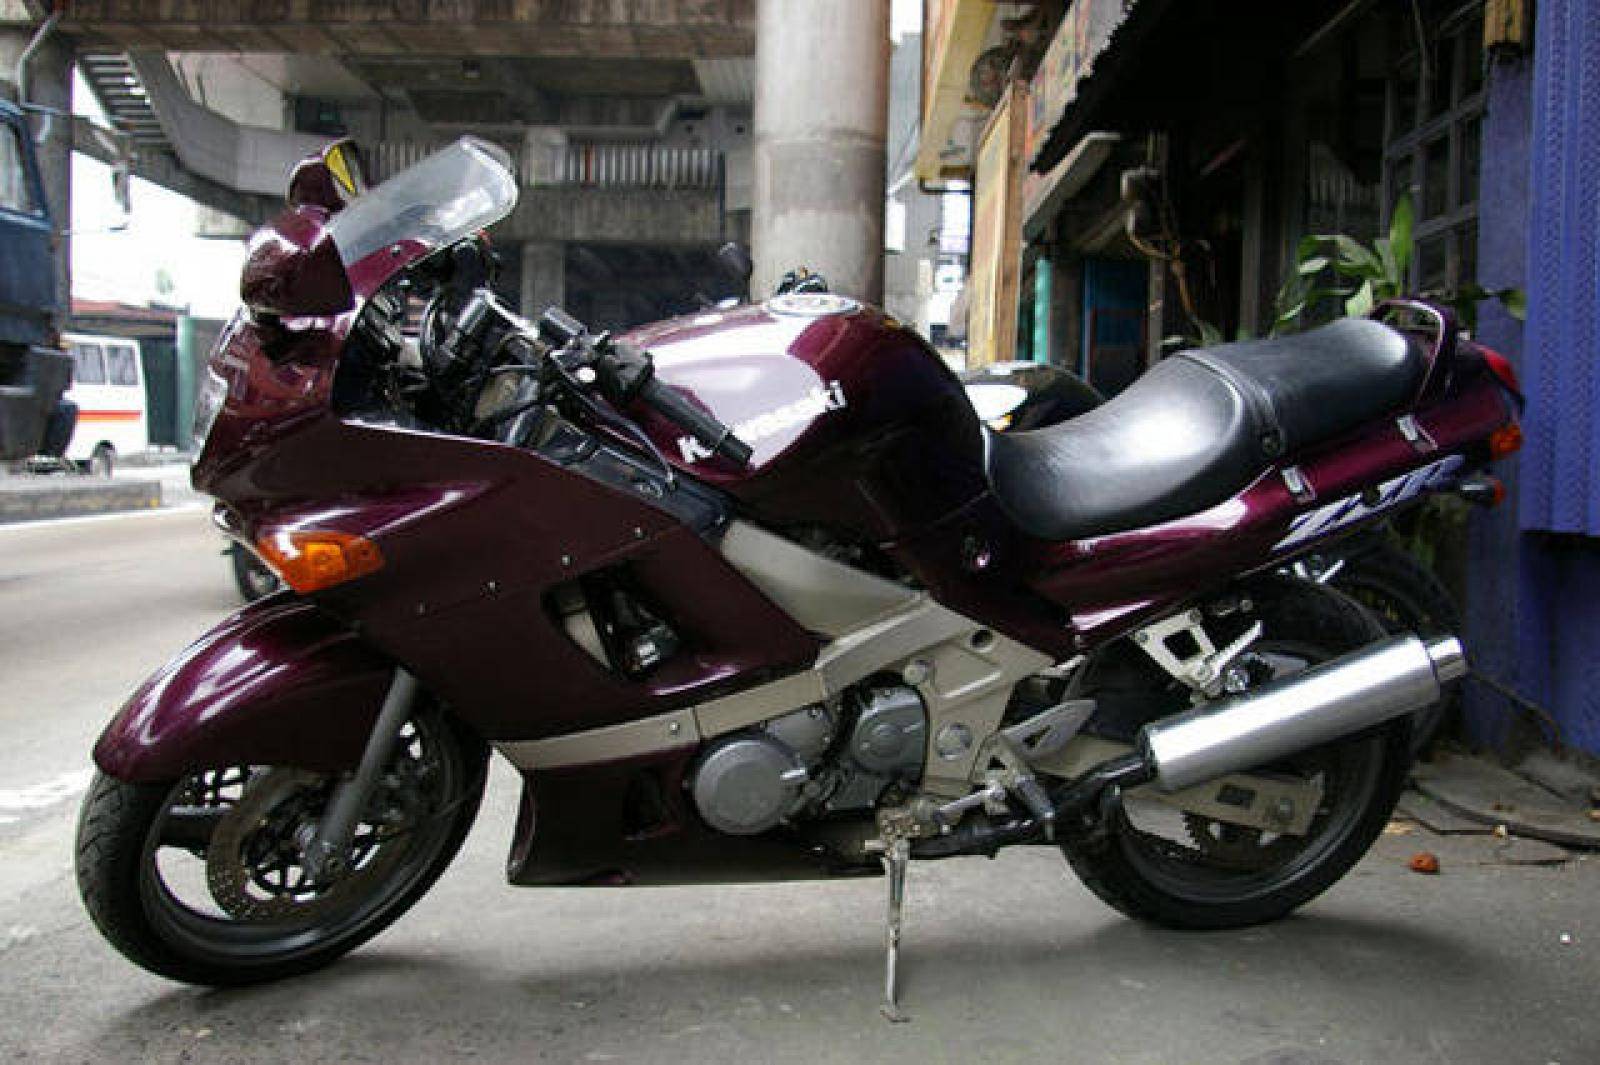 ✅ обзор мотоцикла кавасаки zzr 400: технические характеристики - craitbikes.ru